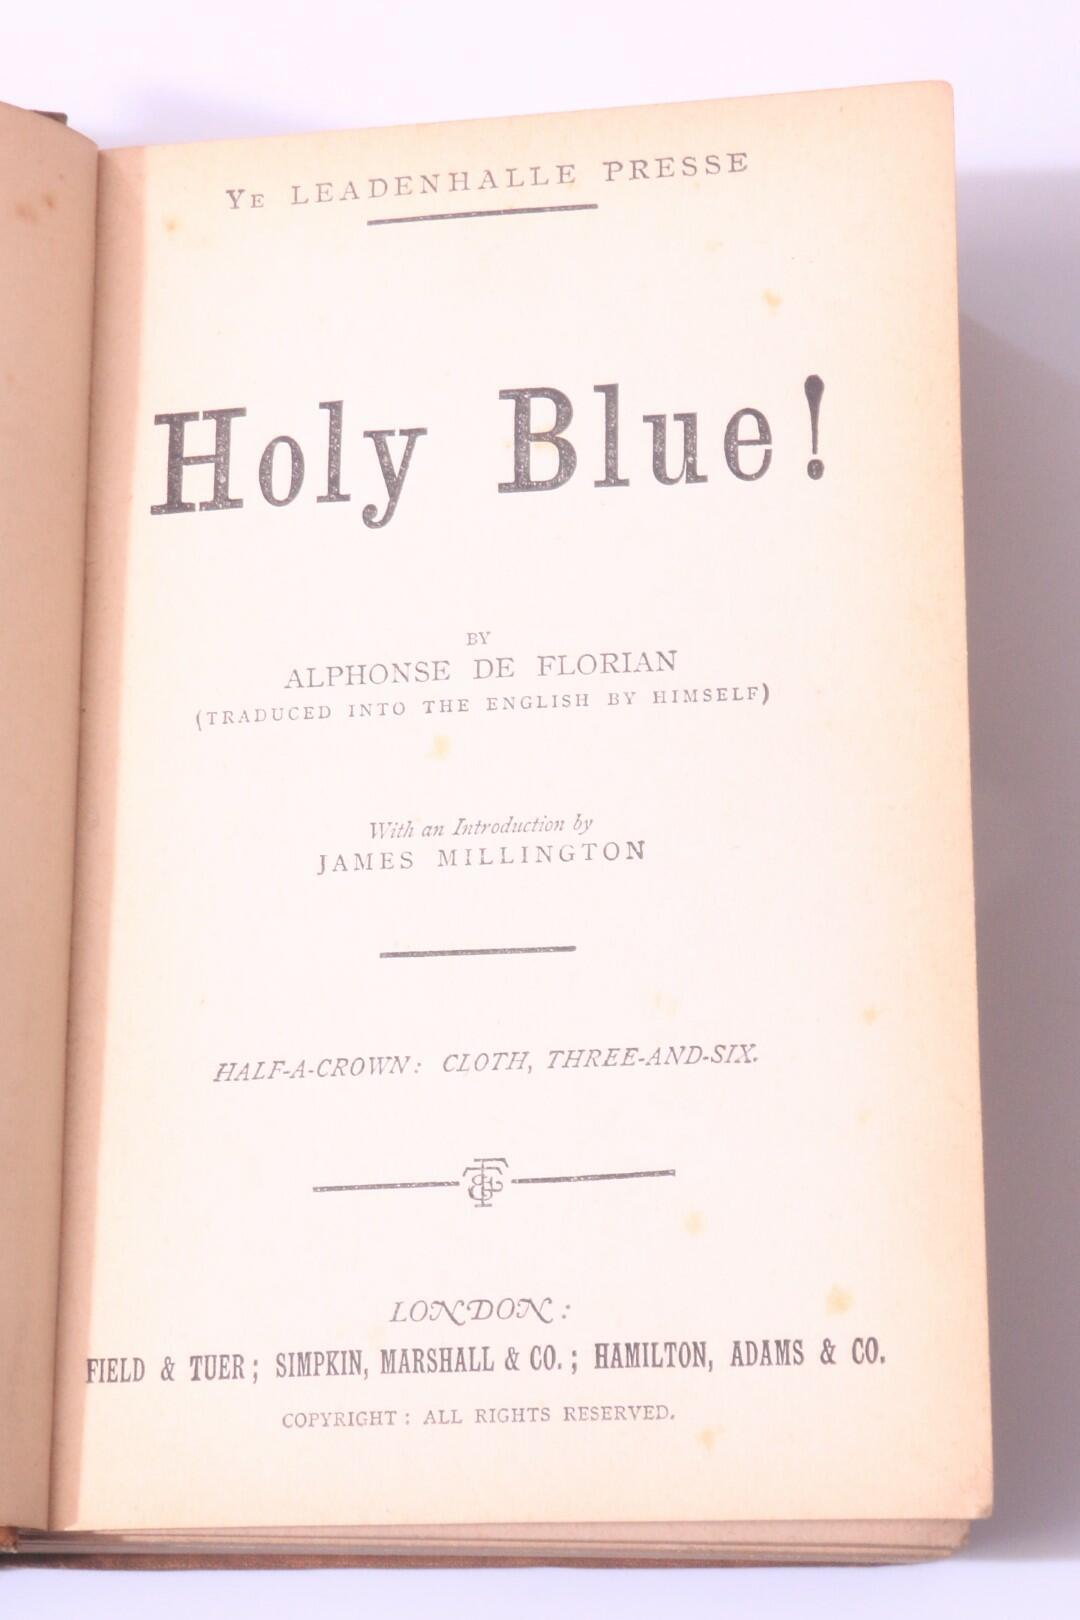 Alphonse de Florian - Holy Blue! - Ye Leadenhalle Presse; Field & Tuer, Simpkin Marshall, Hamilton Adams, nd [1884], First Edition.